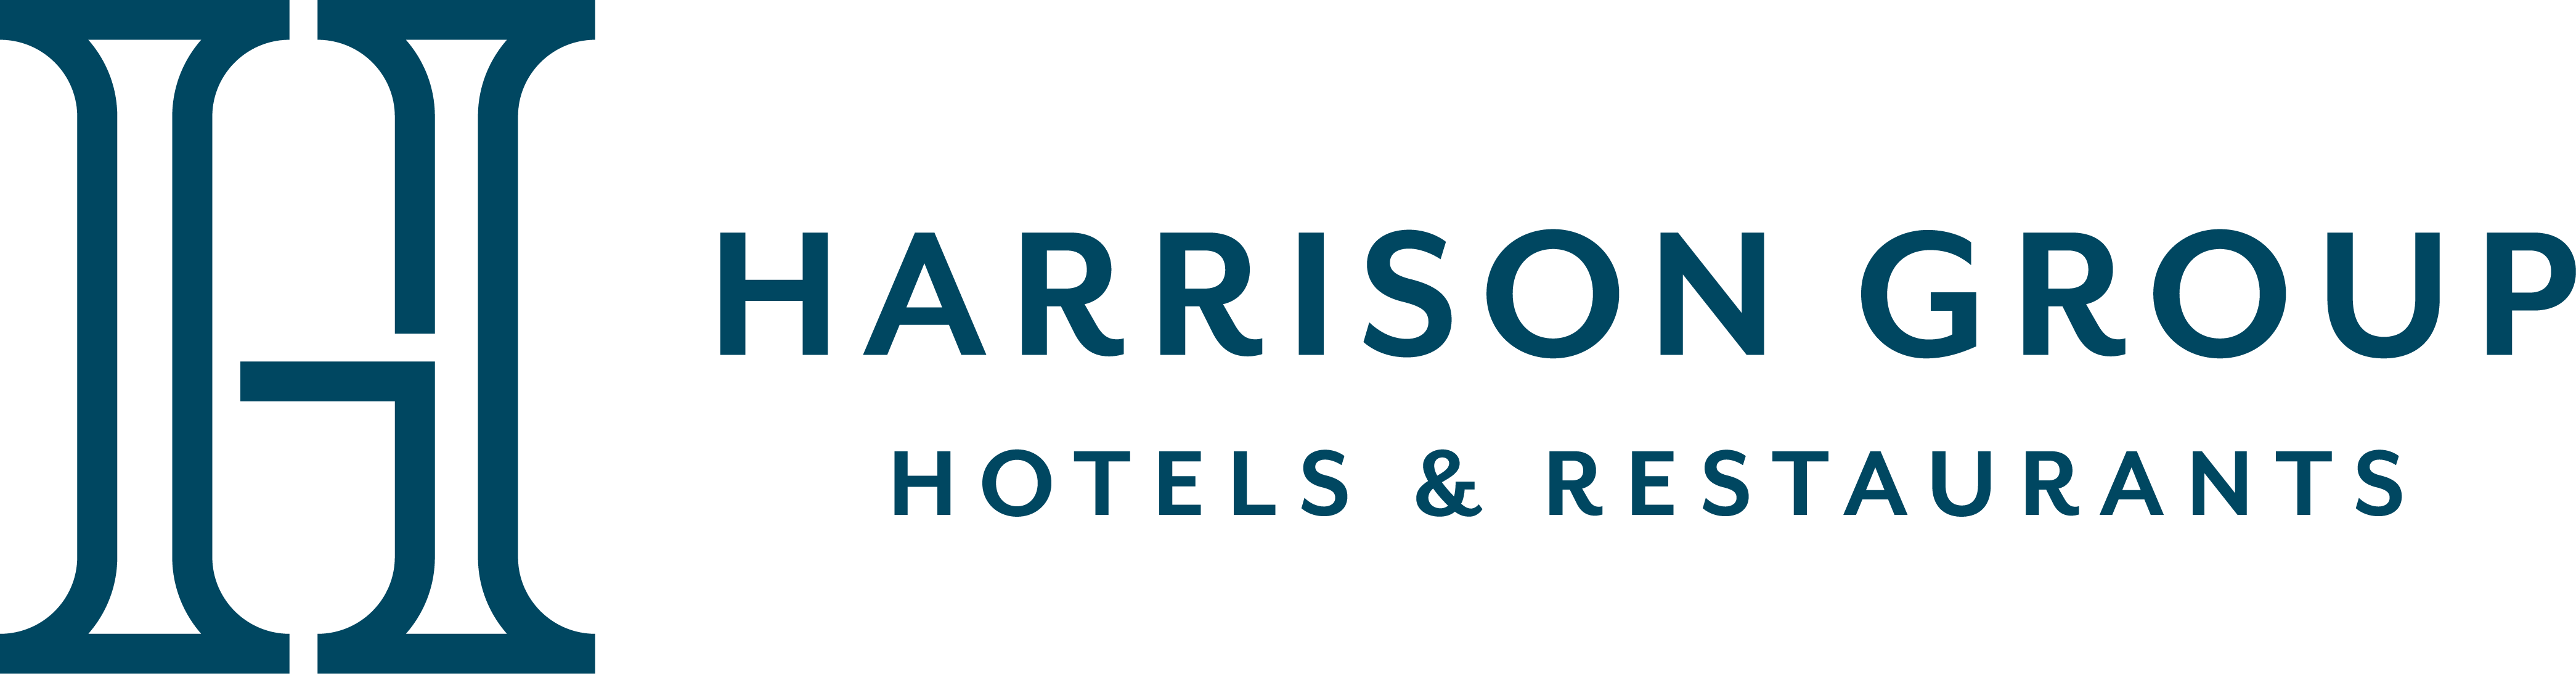 Harrison Group logo